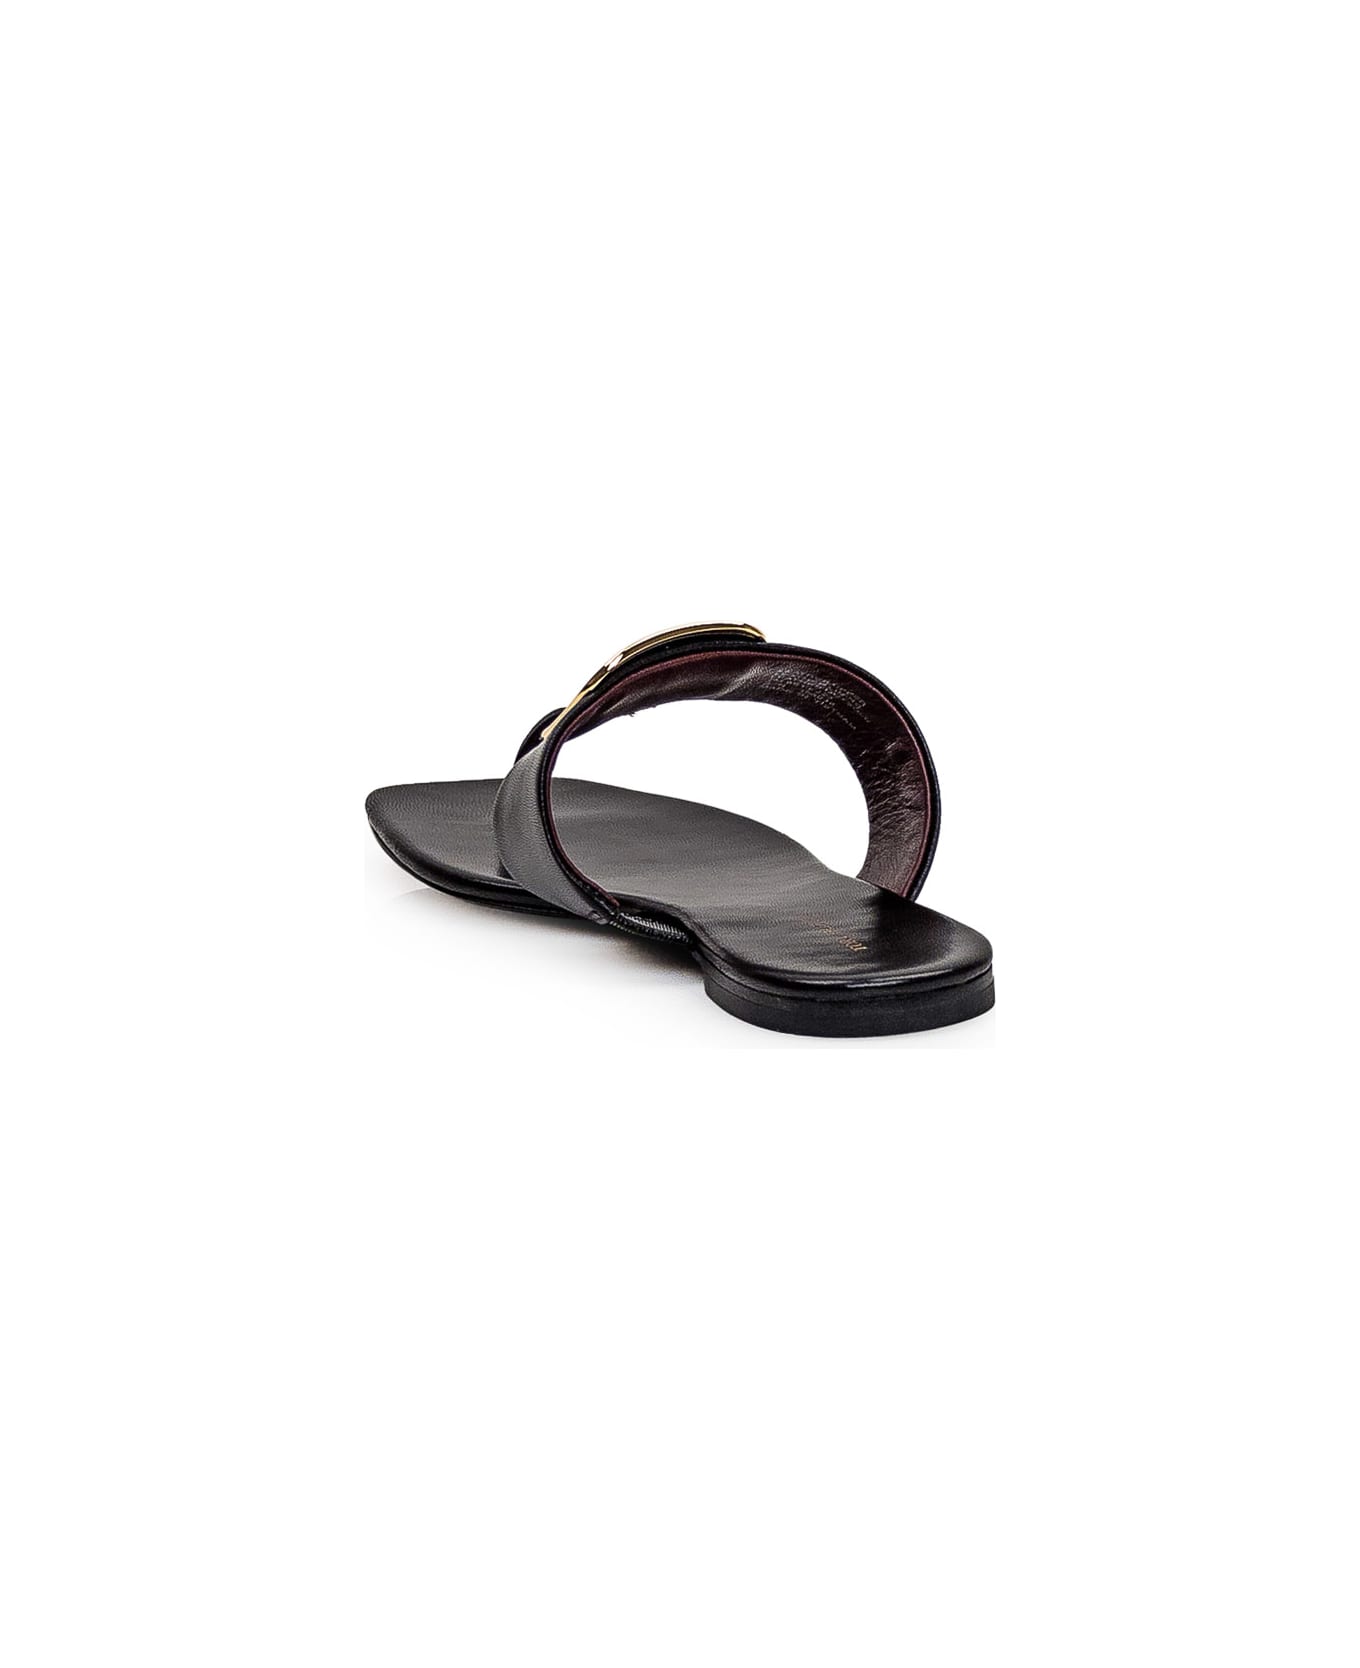 Tory Burch Georgia Leather Flat Sandals - black